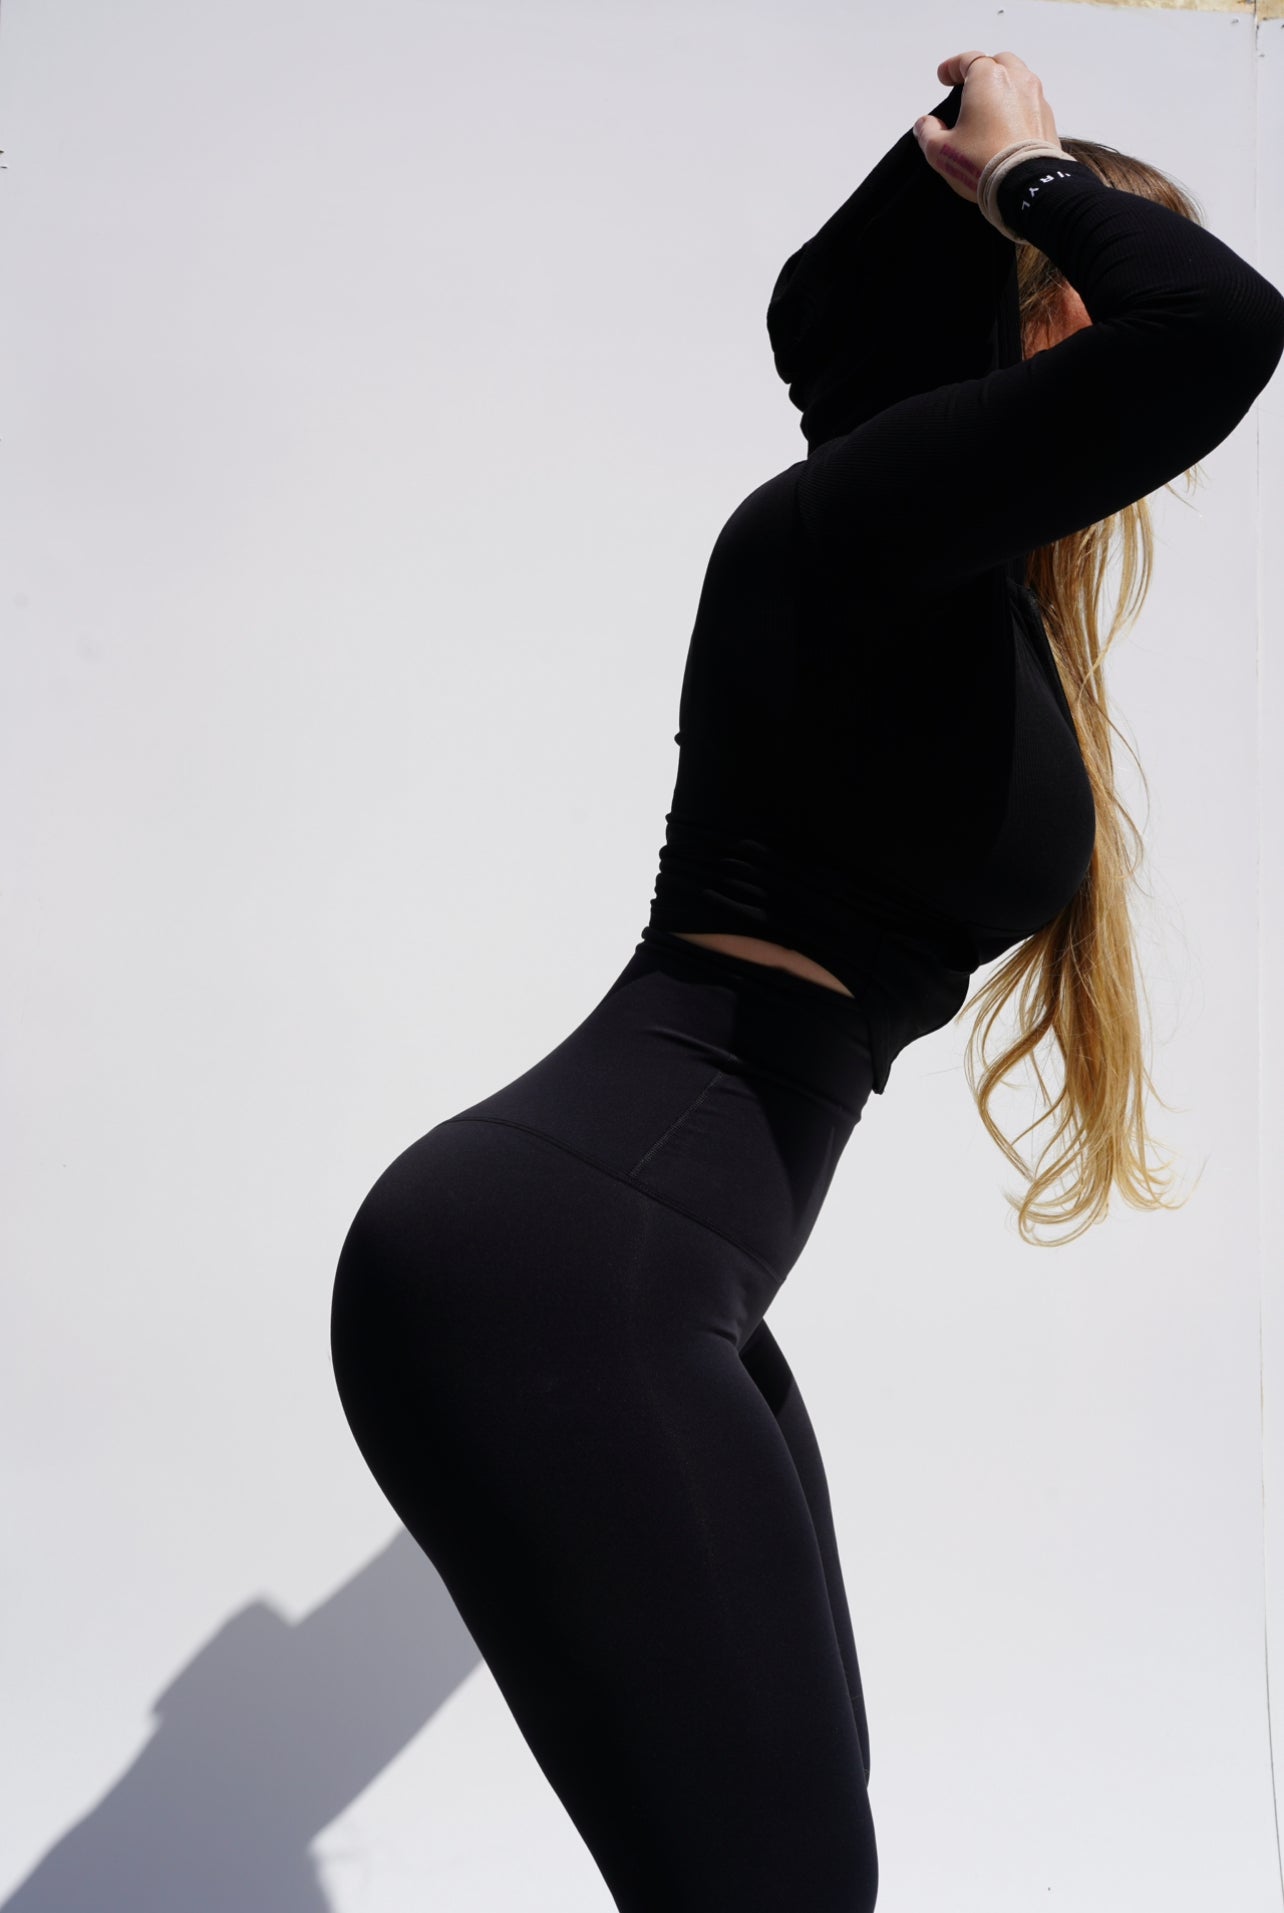 Naturyl by Niykee NBK Niykee Heaton Leggings Fleece Style Black Size Large  NEW - Athletic apparel